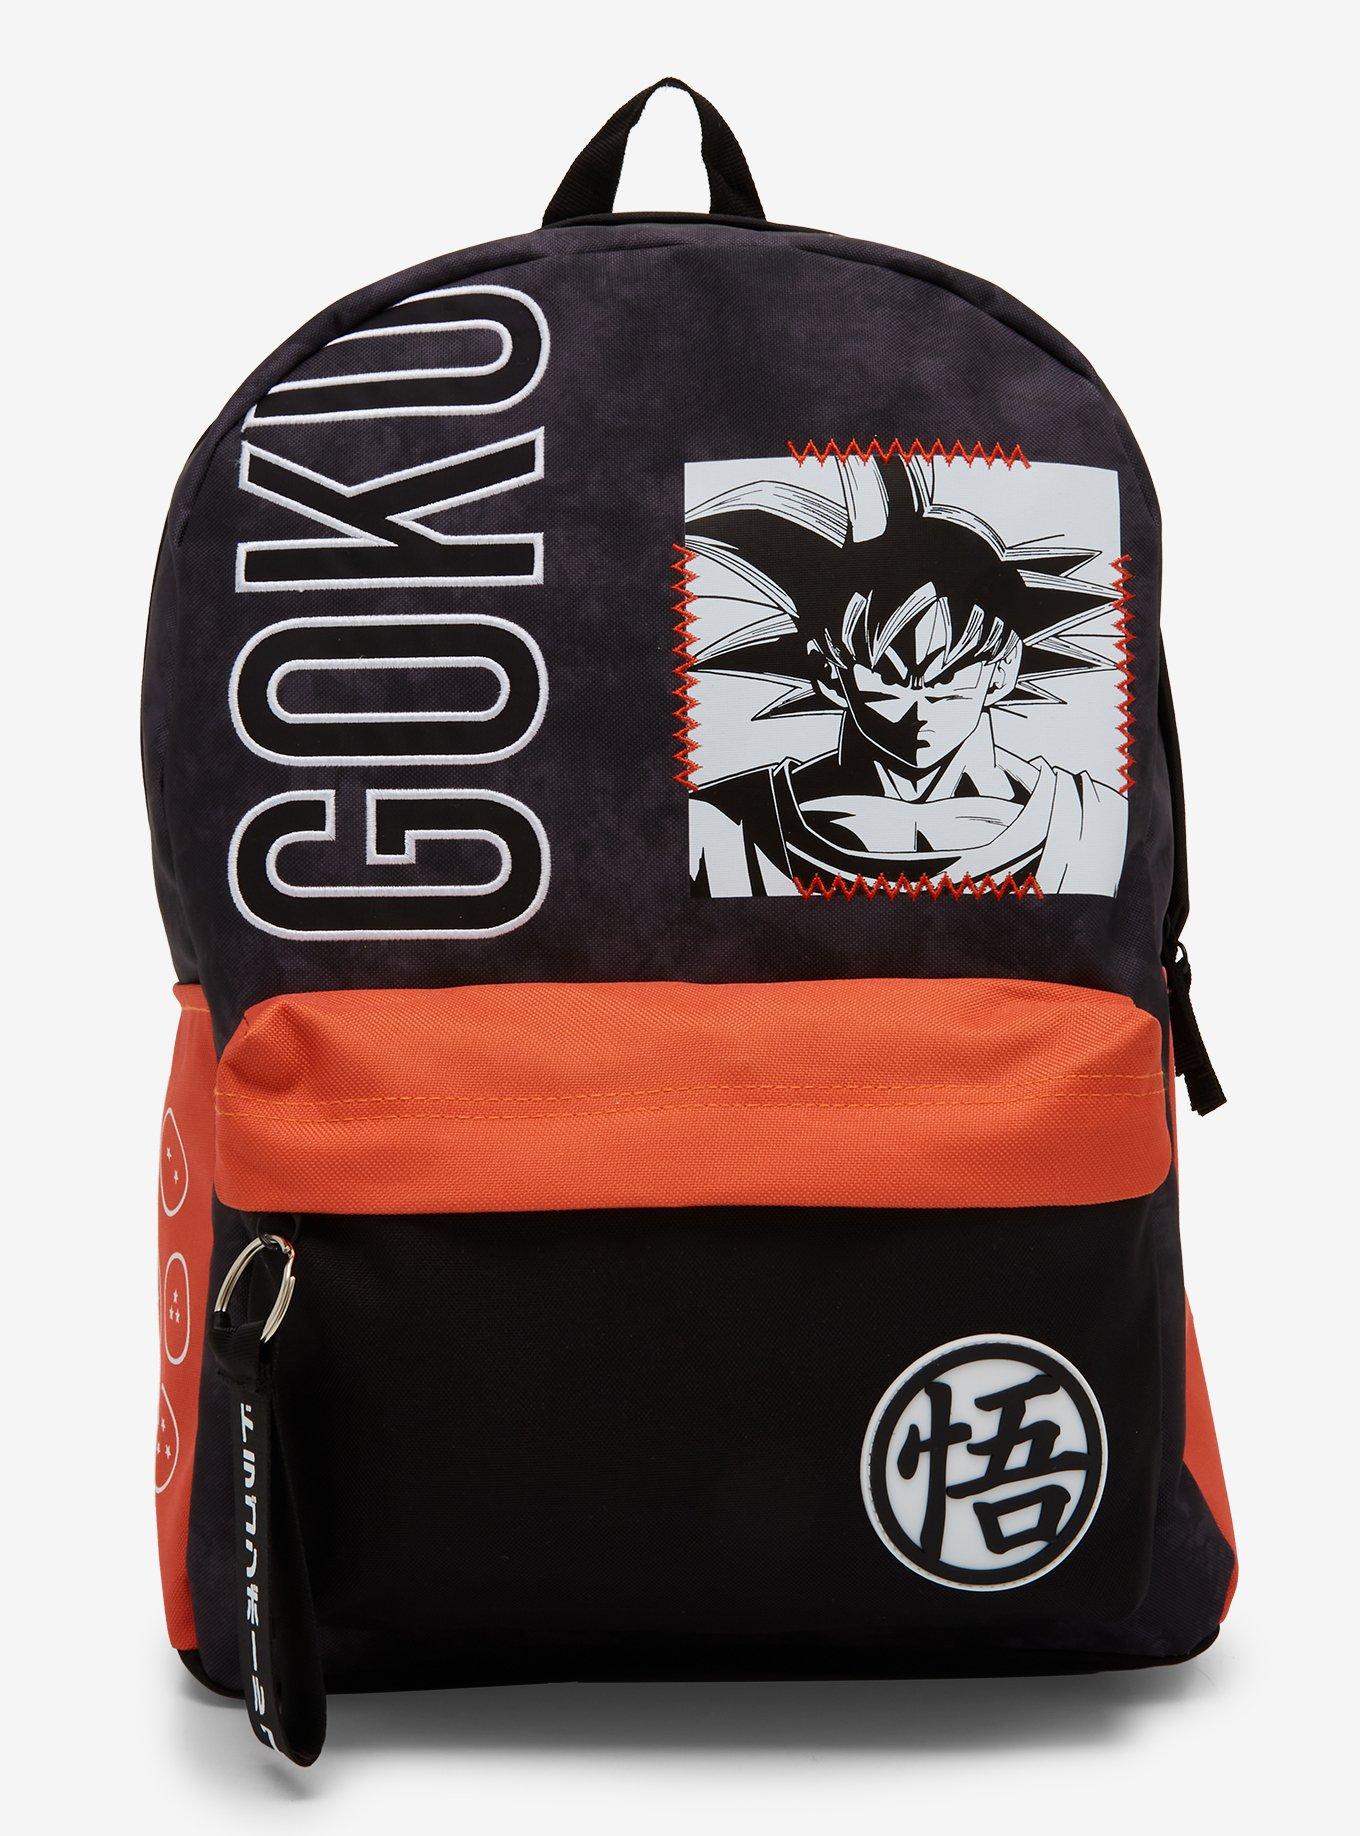 Awesome Super Saiyan god red Goku backpack